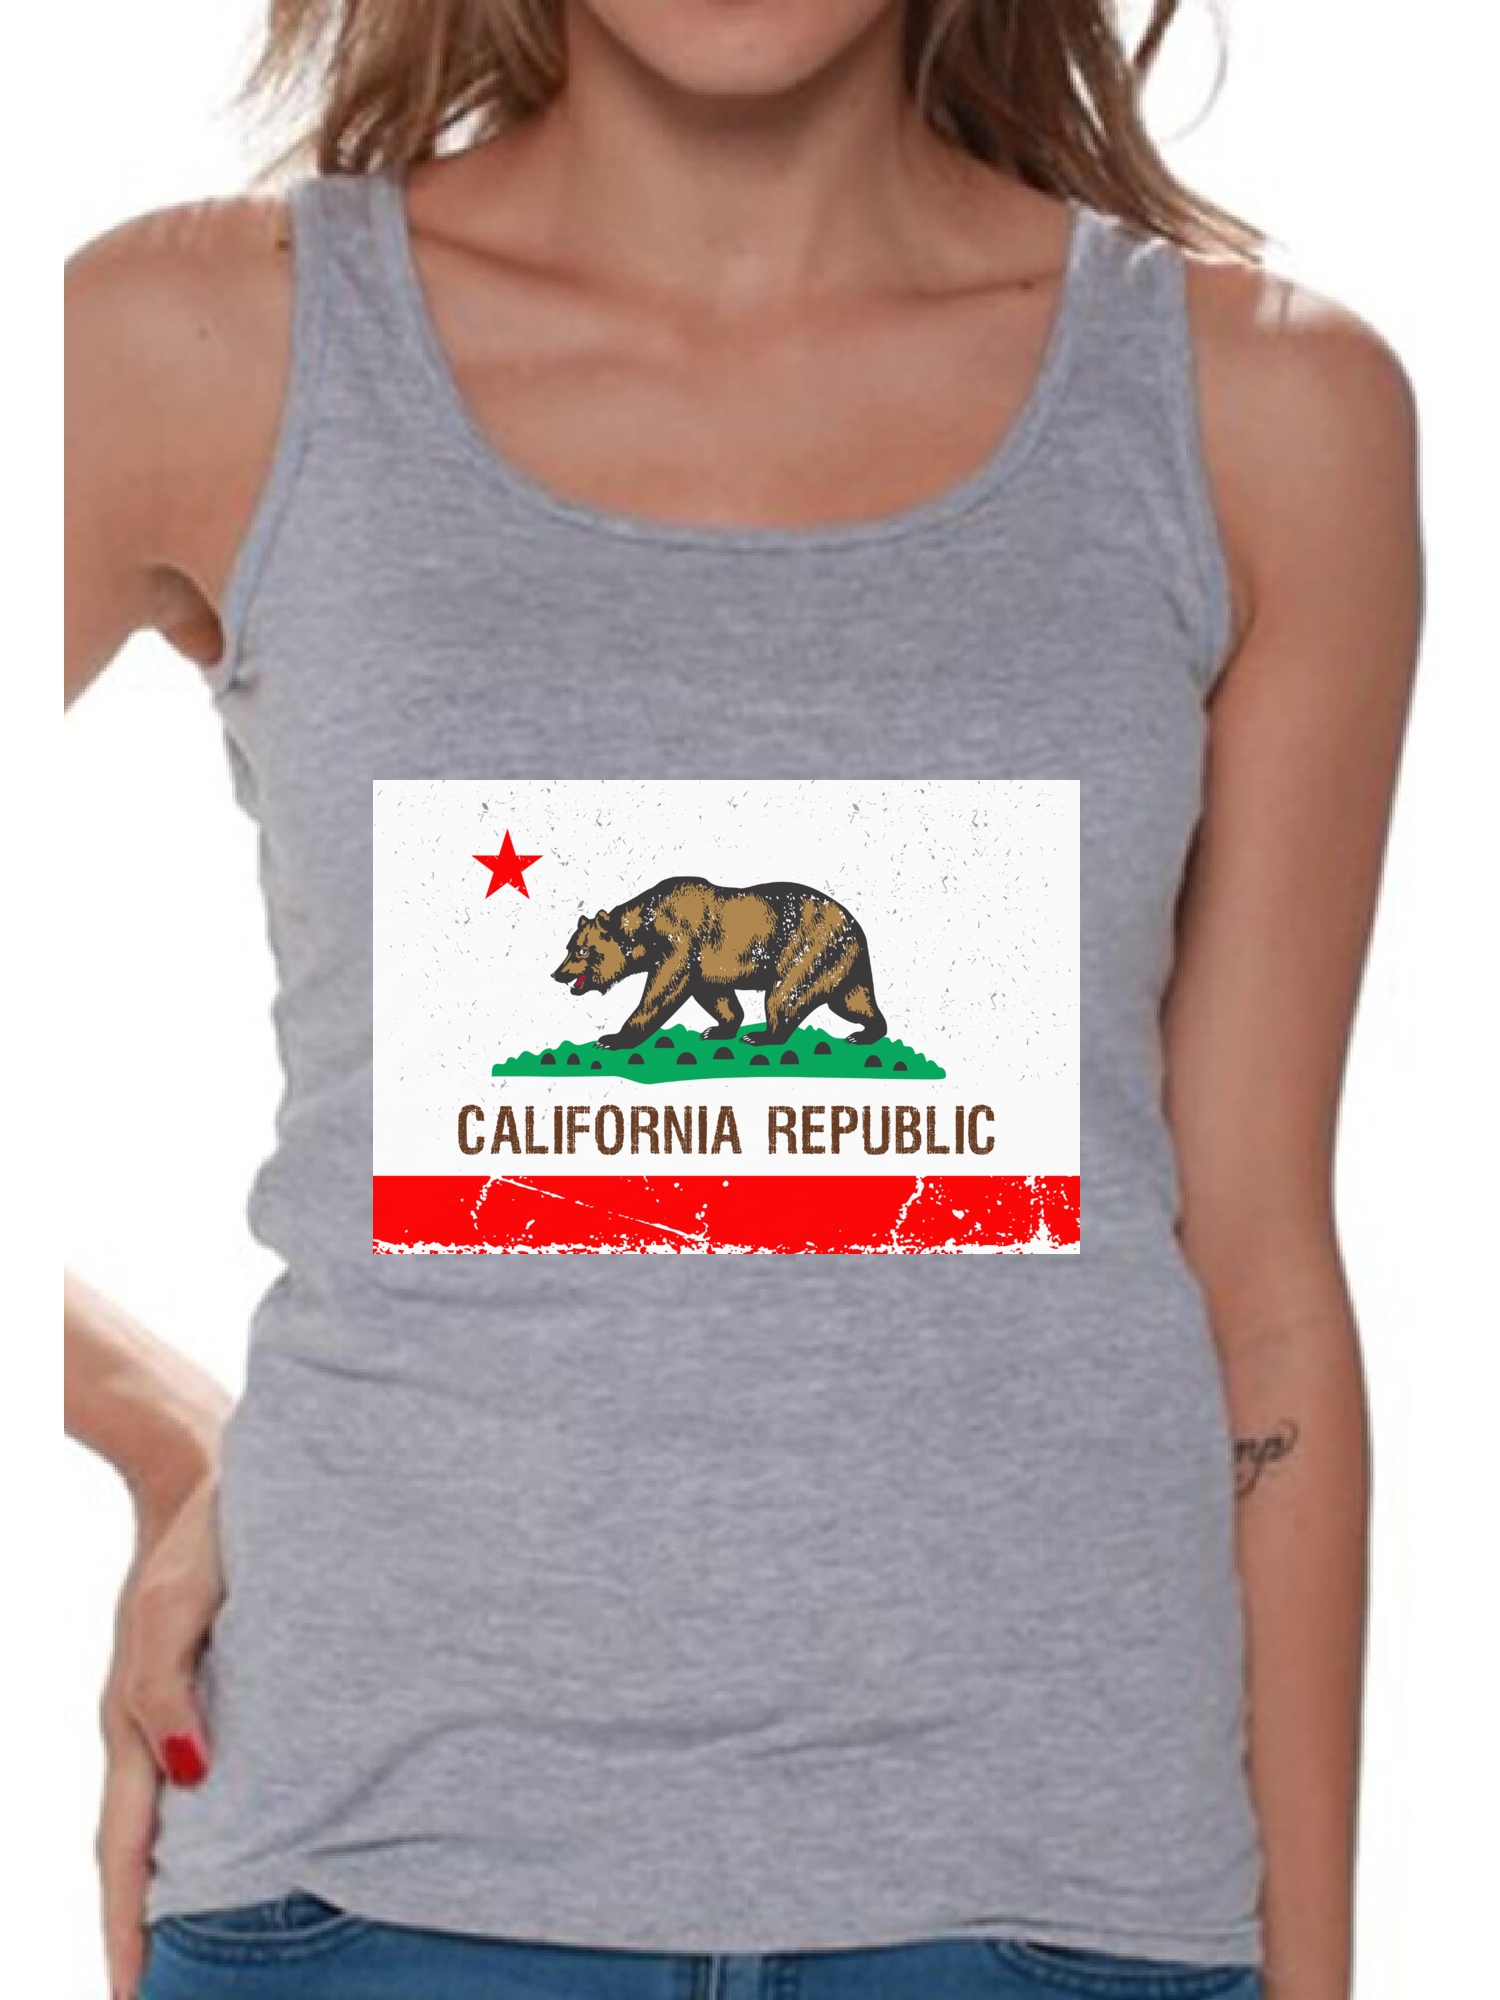 Awkward Styles California Republic Flag Tank Top for Women California Bear Tank California Flag Sleeveless Shirt Cali Gifts Women's California Fitness Tank Top Gifts from California - image 1 of 4